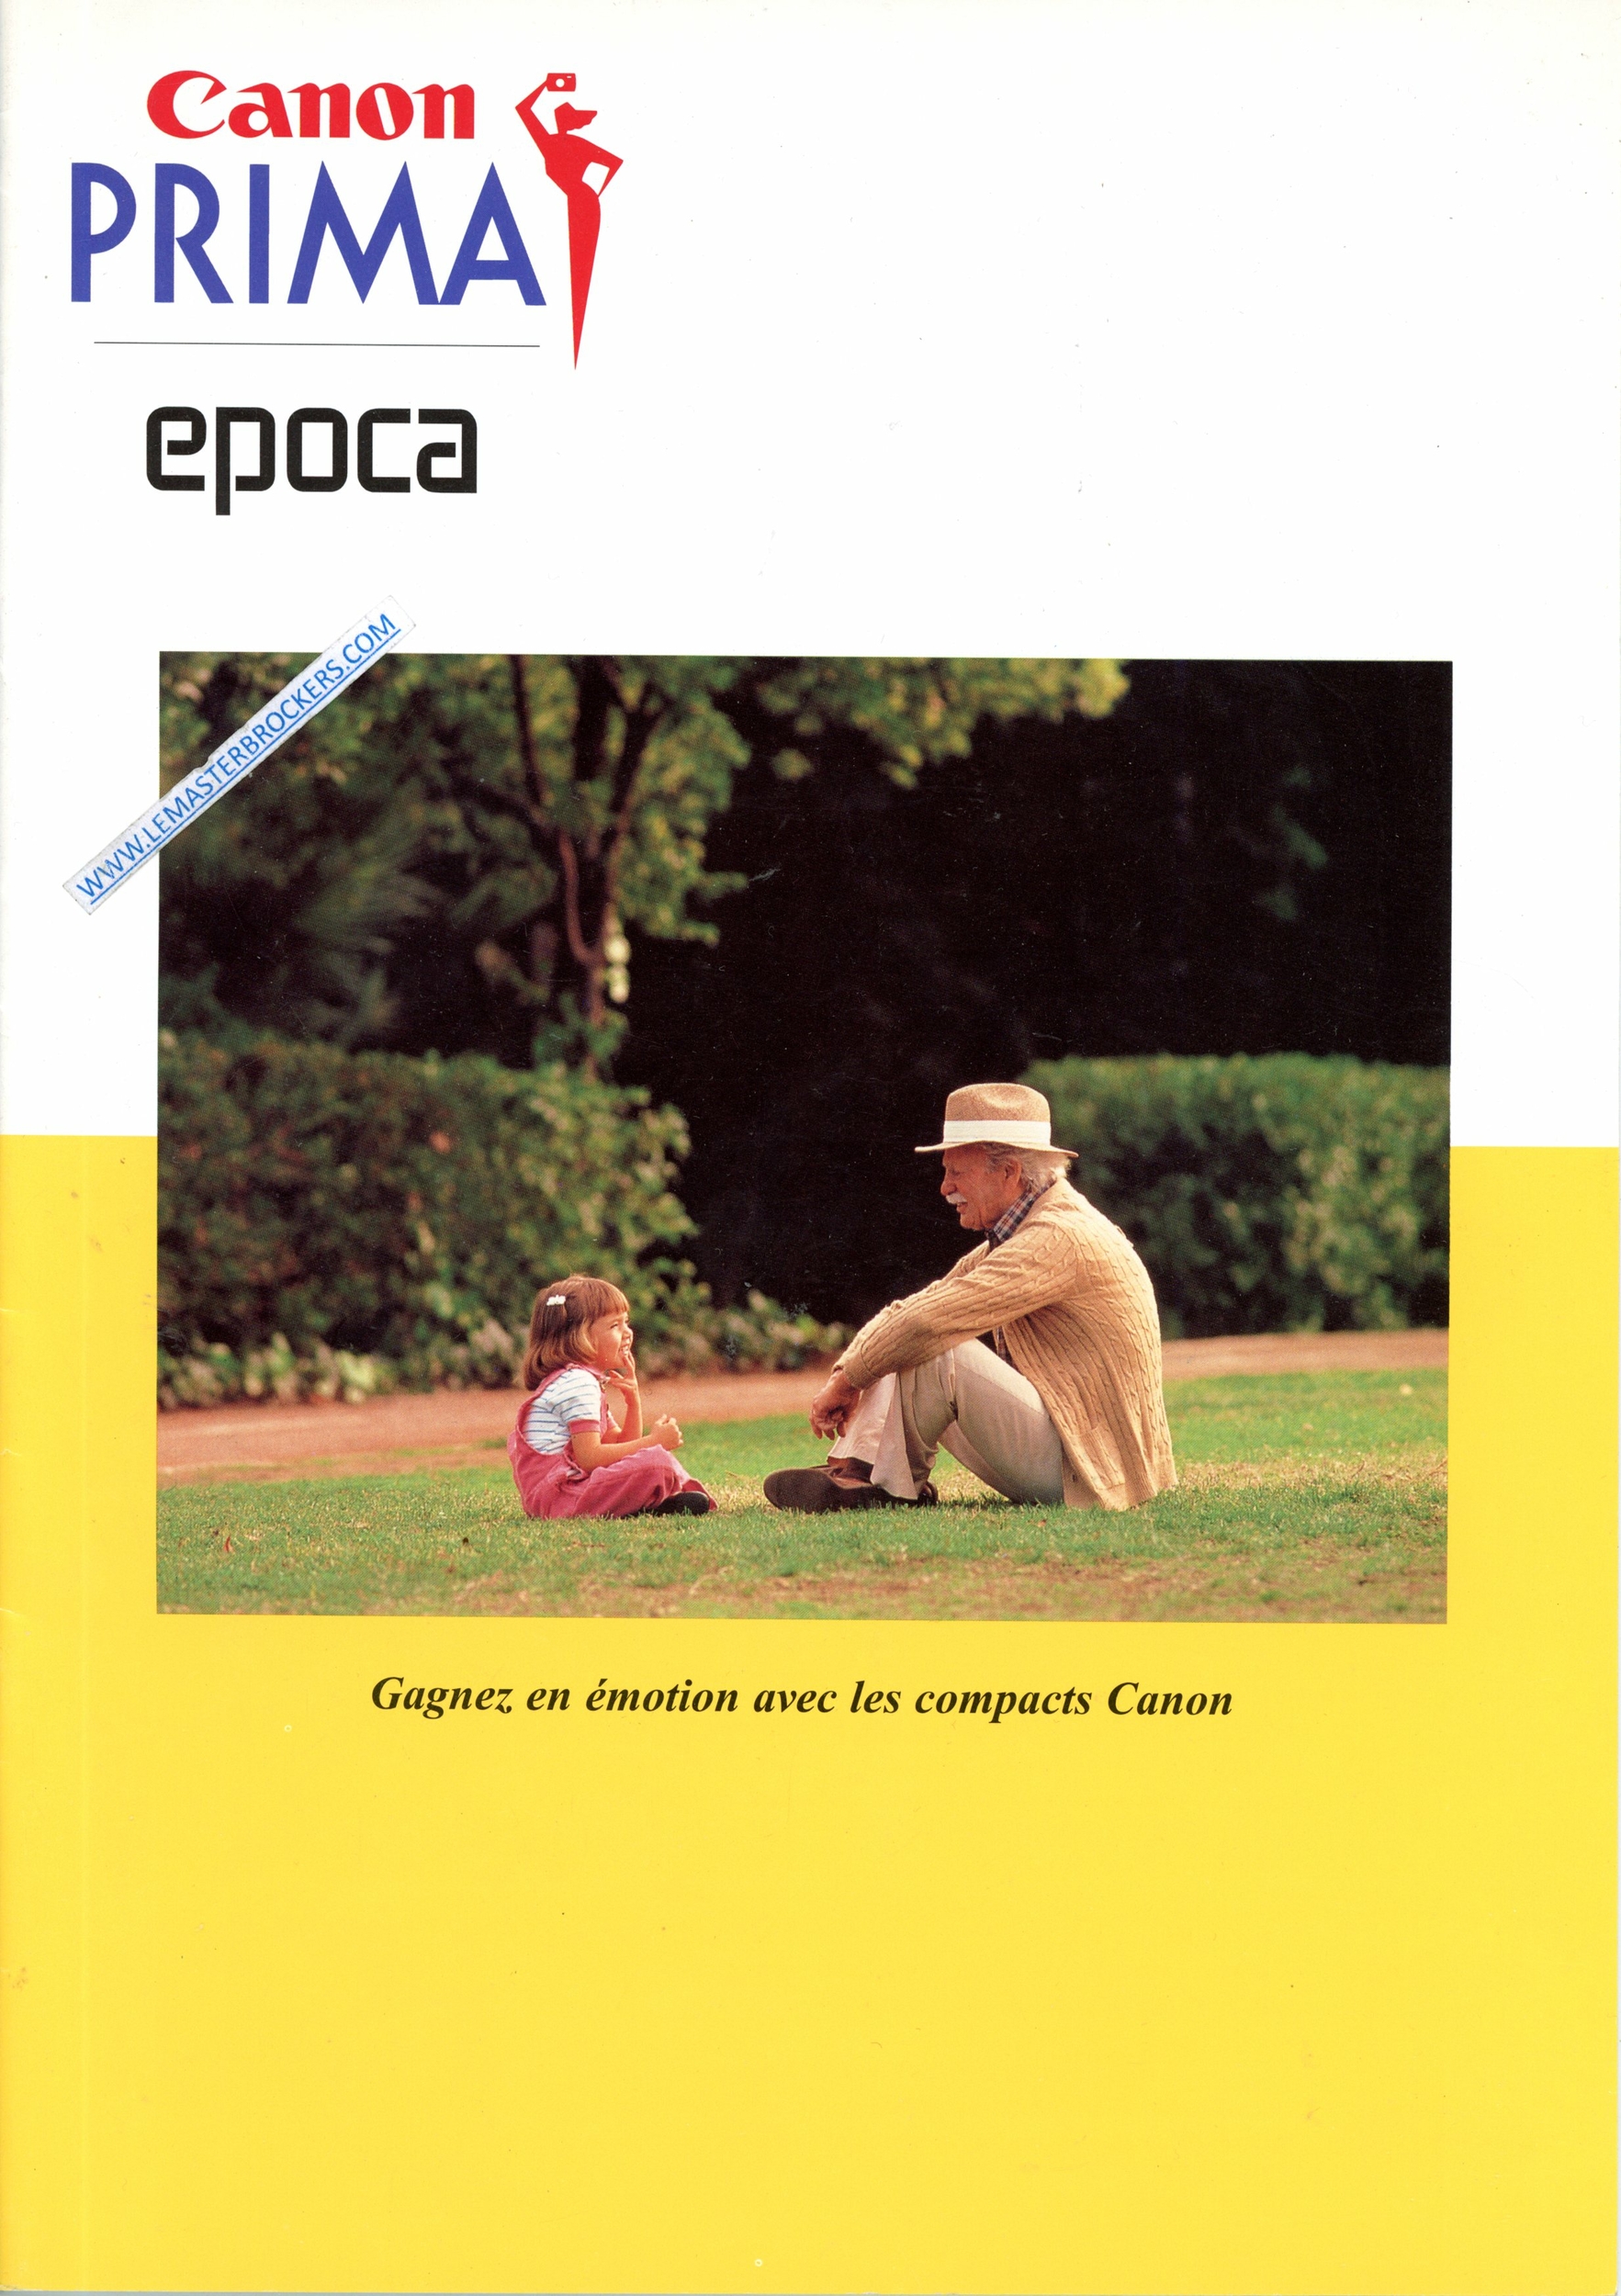 CANON PRIMA EPOCA BROCHURE DE 1995